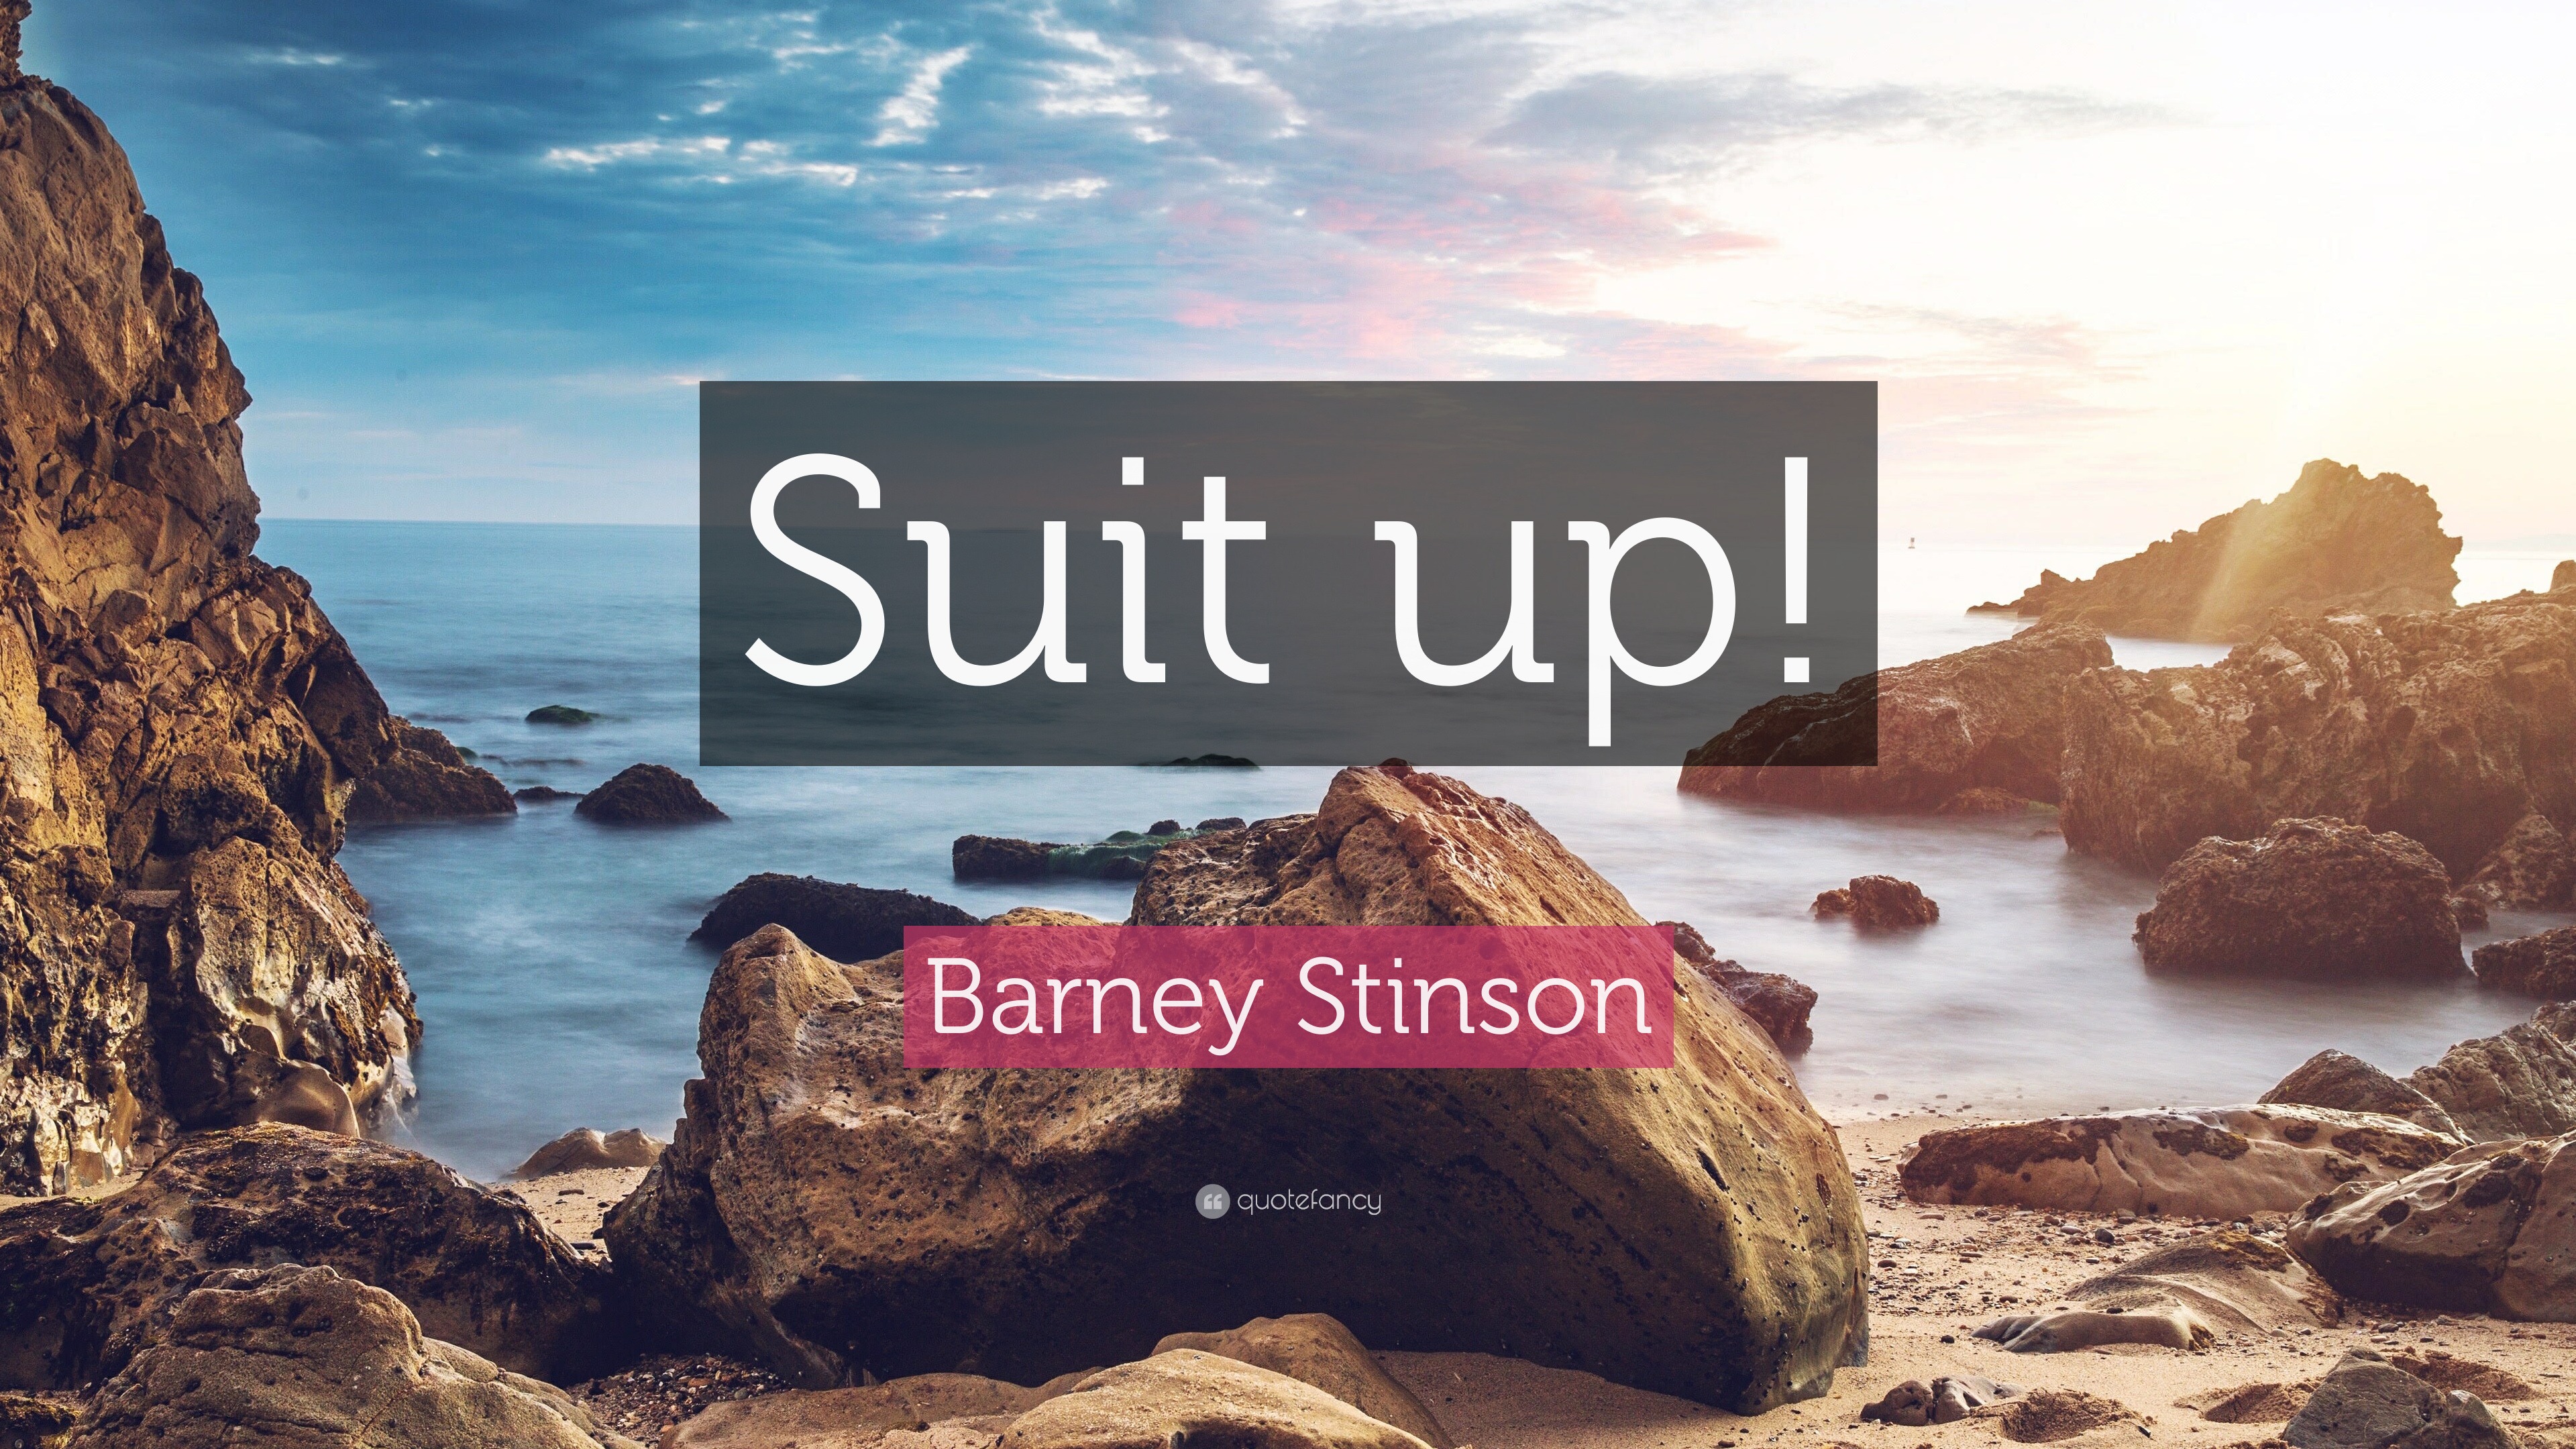 barney stinson suit up wallpaper